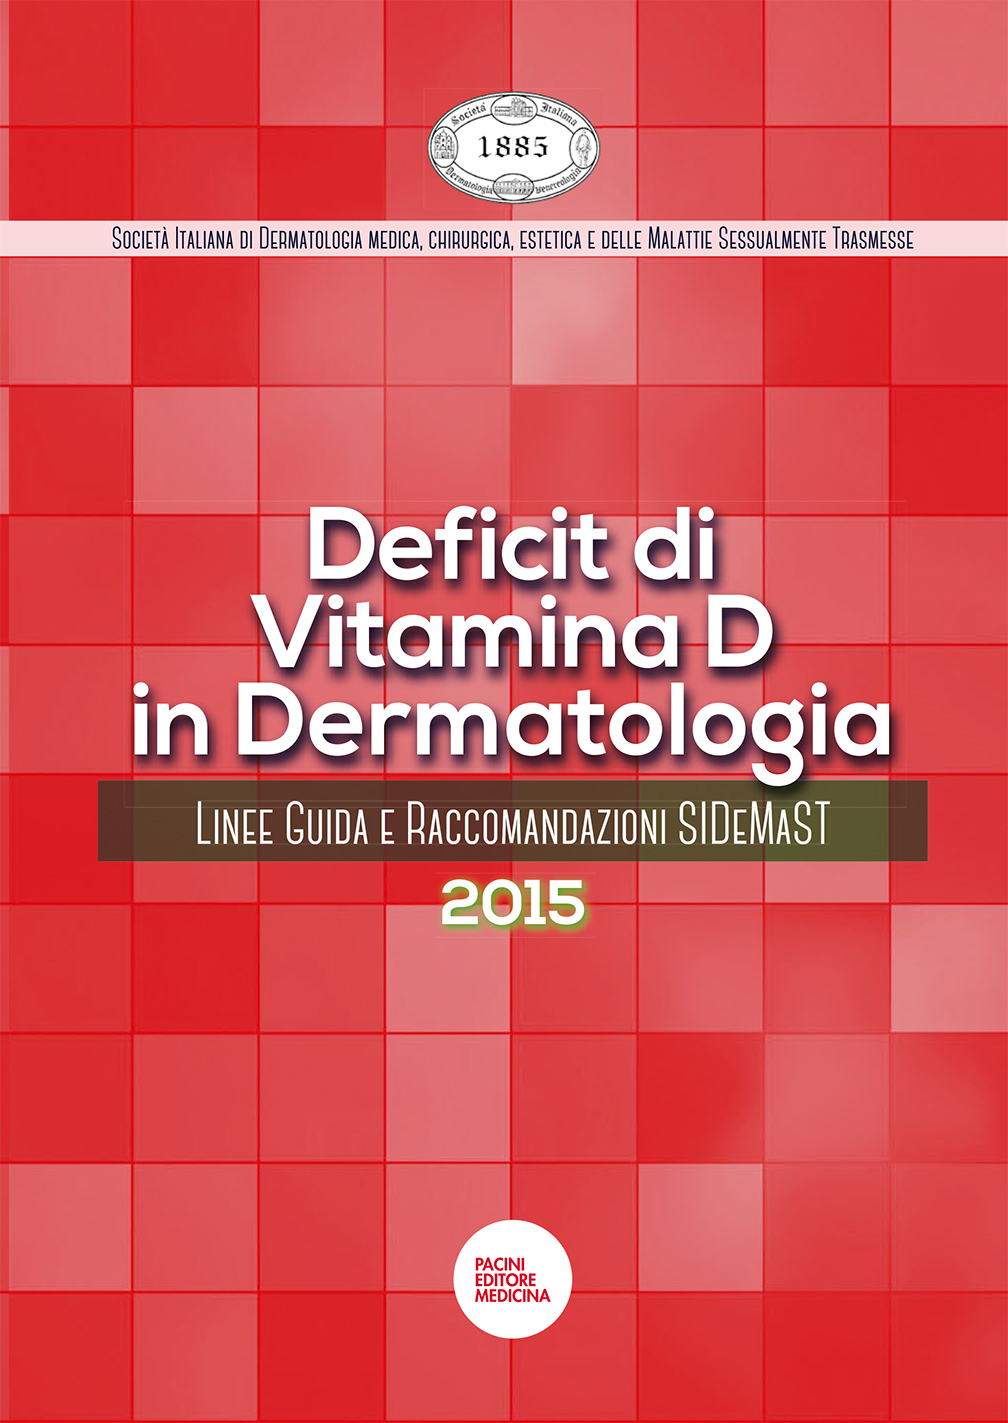 Linee Guida sul deficit di Vitamina D in dermatologia